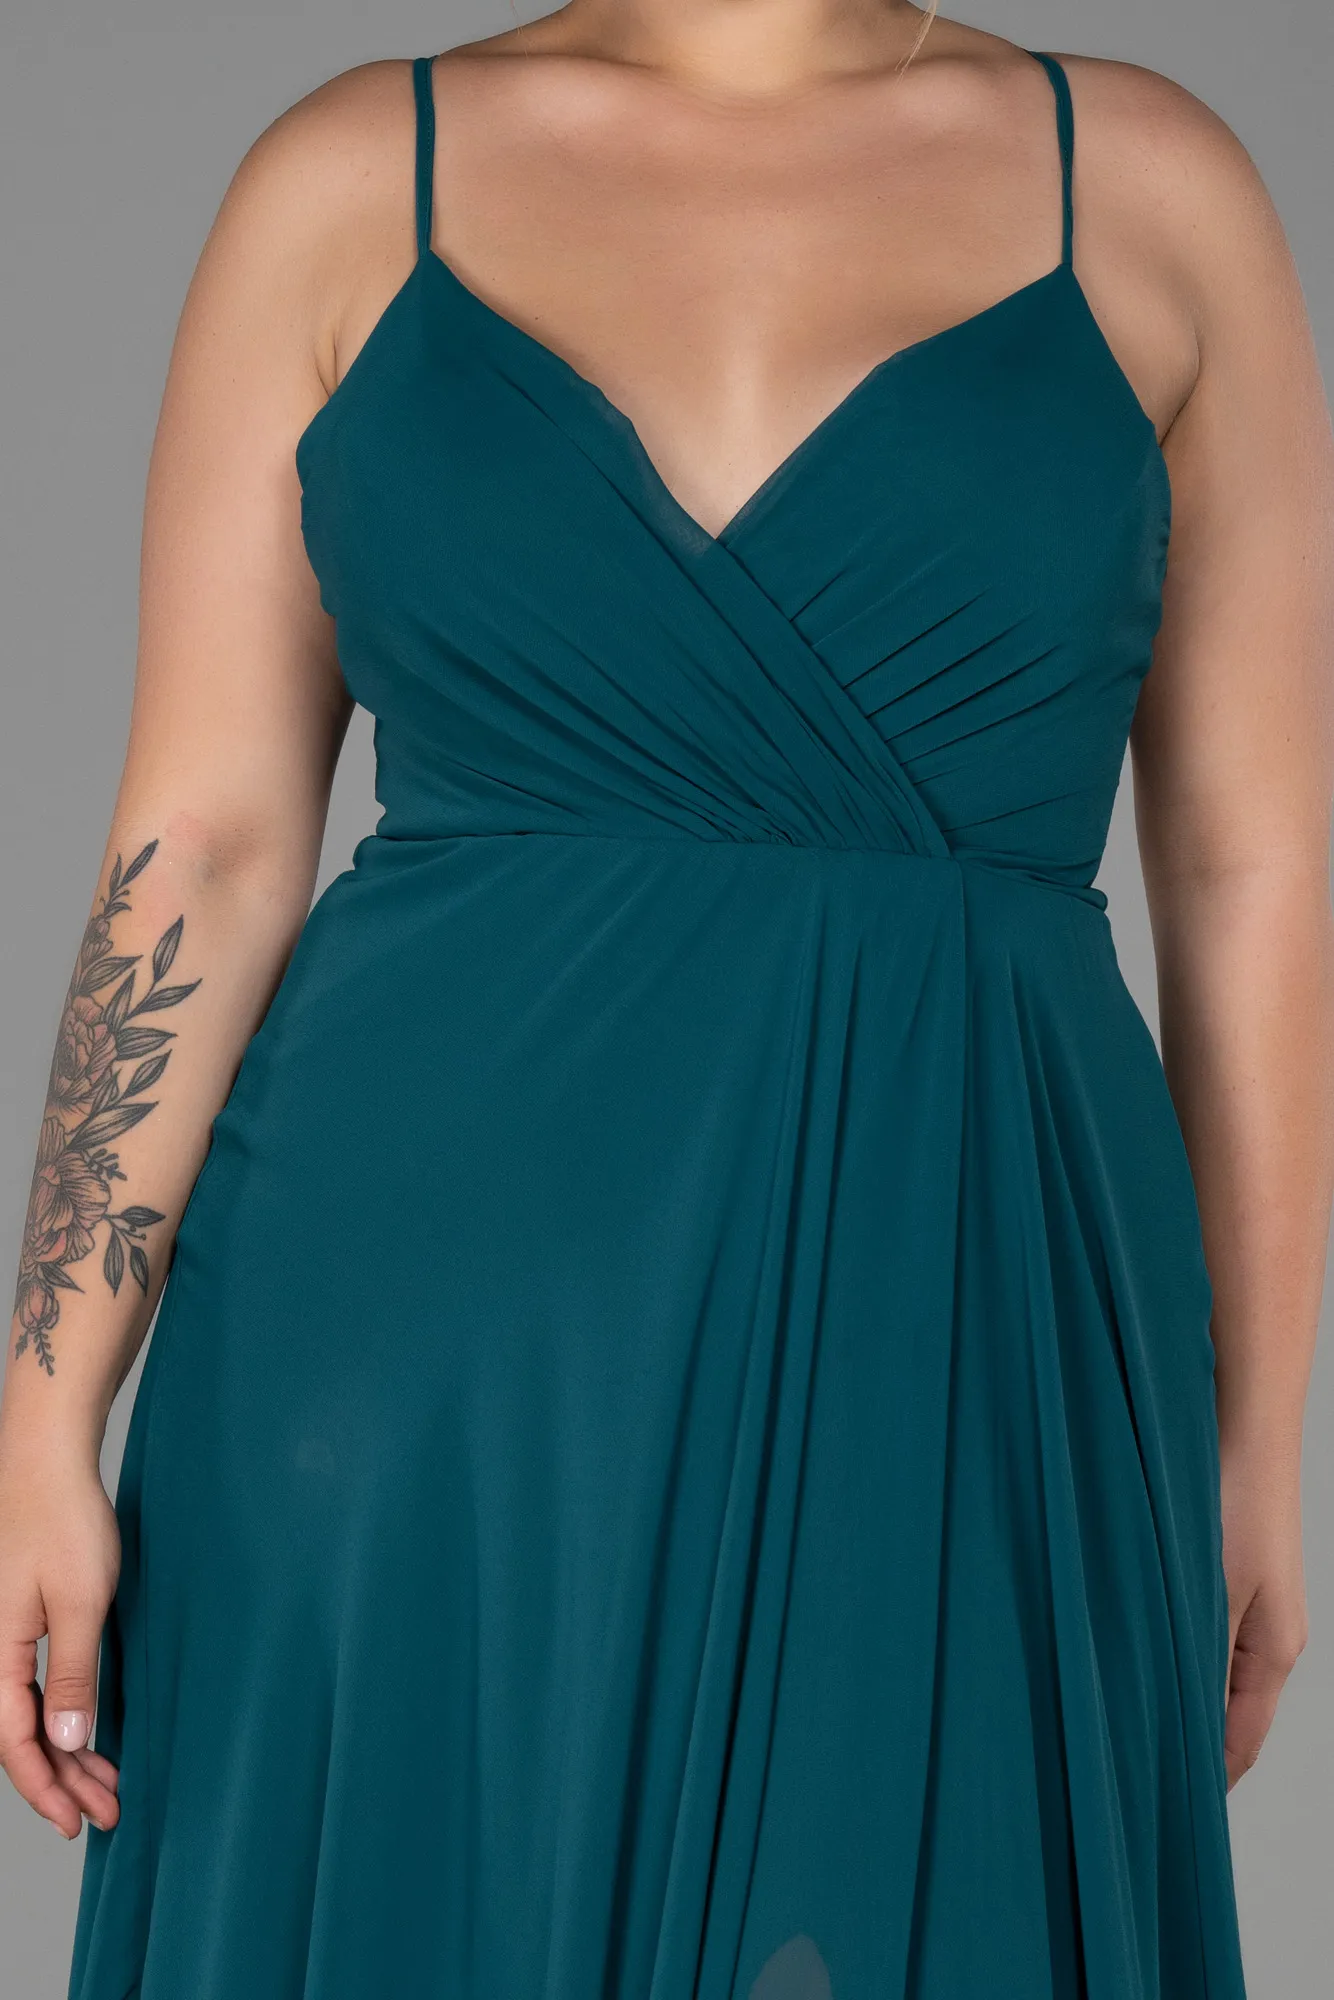 Emerald Green-Long Plus Size Evening Dress ABU1324